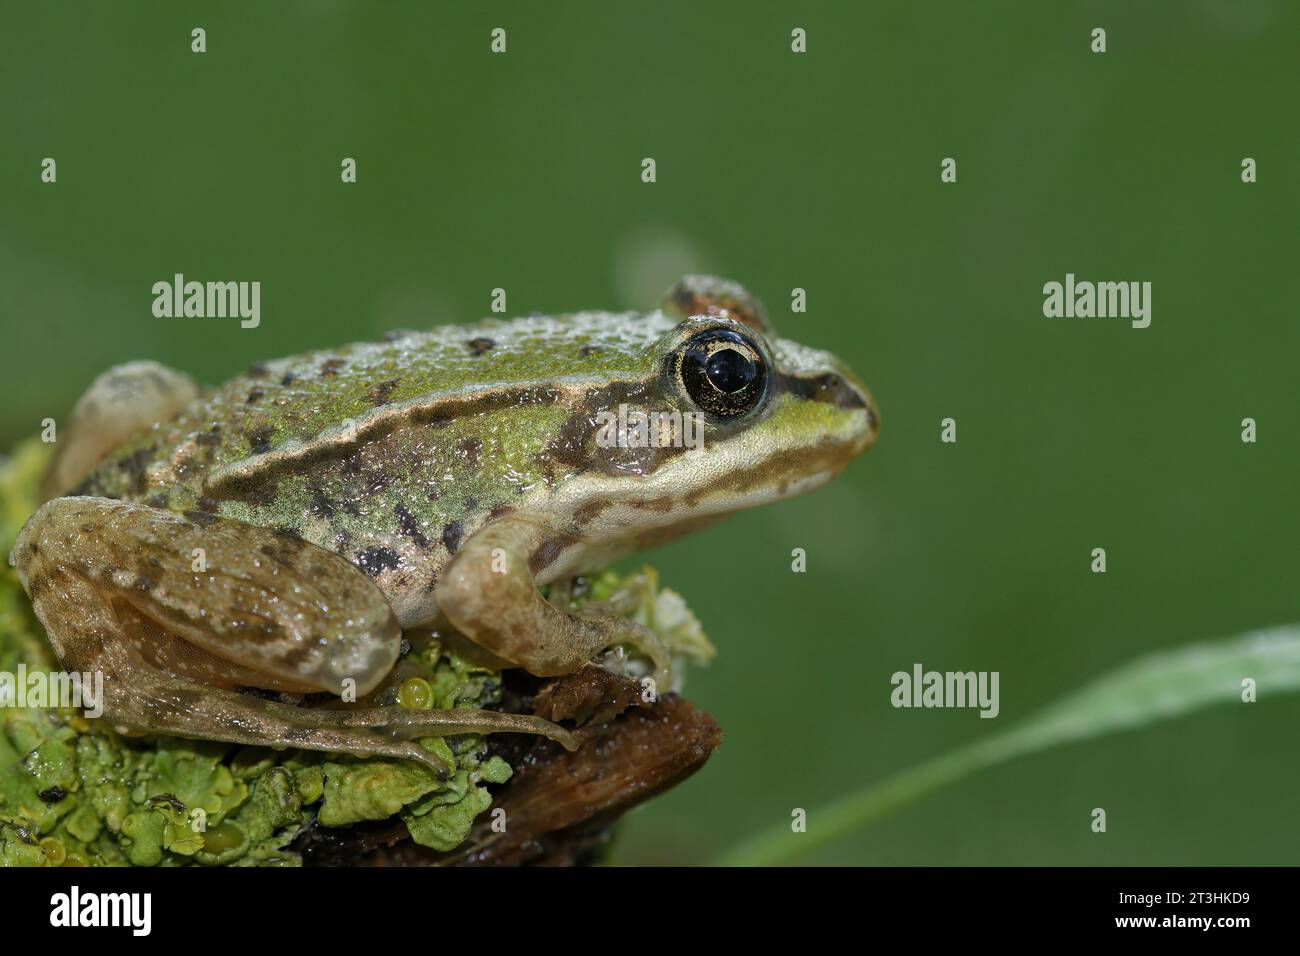 Natural closeup on a brilliant green juvenile Marsh frog, Pelophylax ridibundus sitting on lichen covered wood Stock Photo